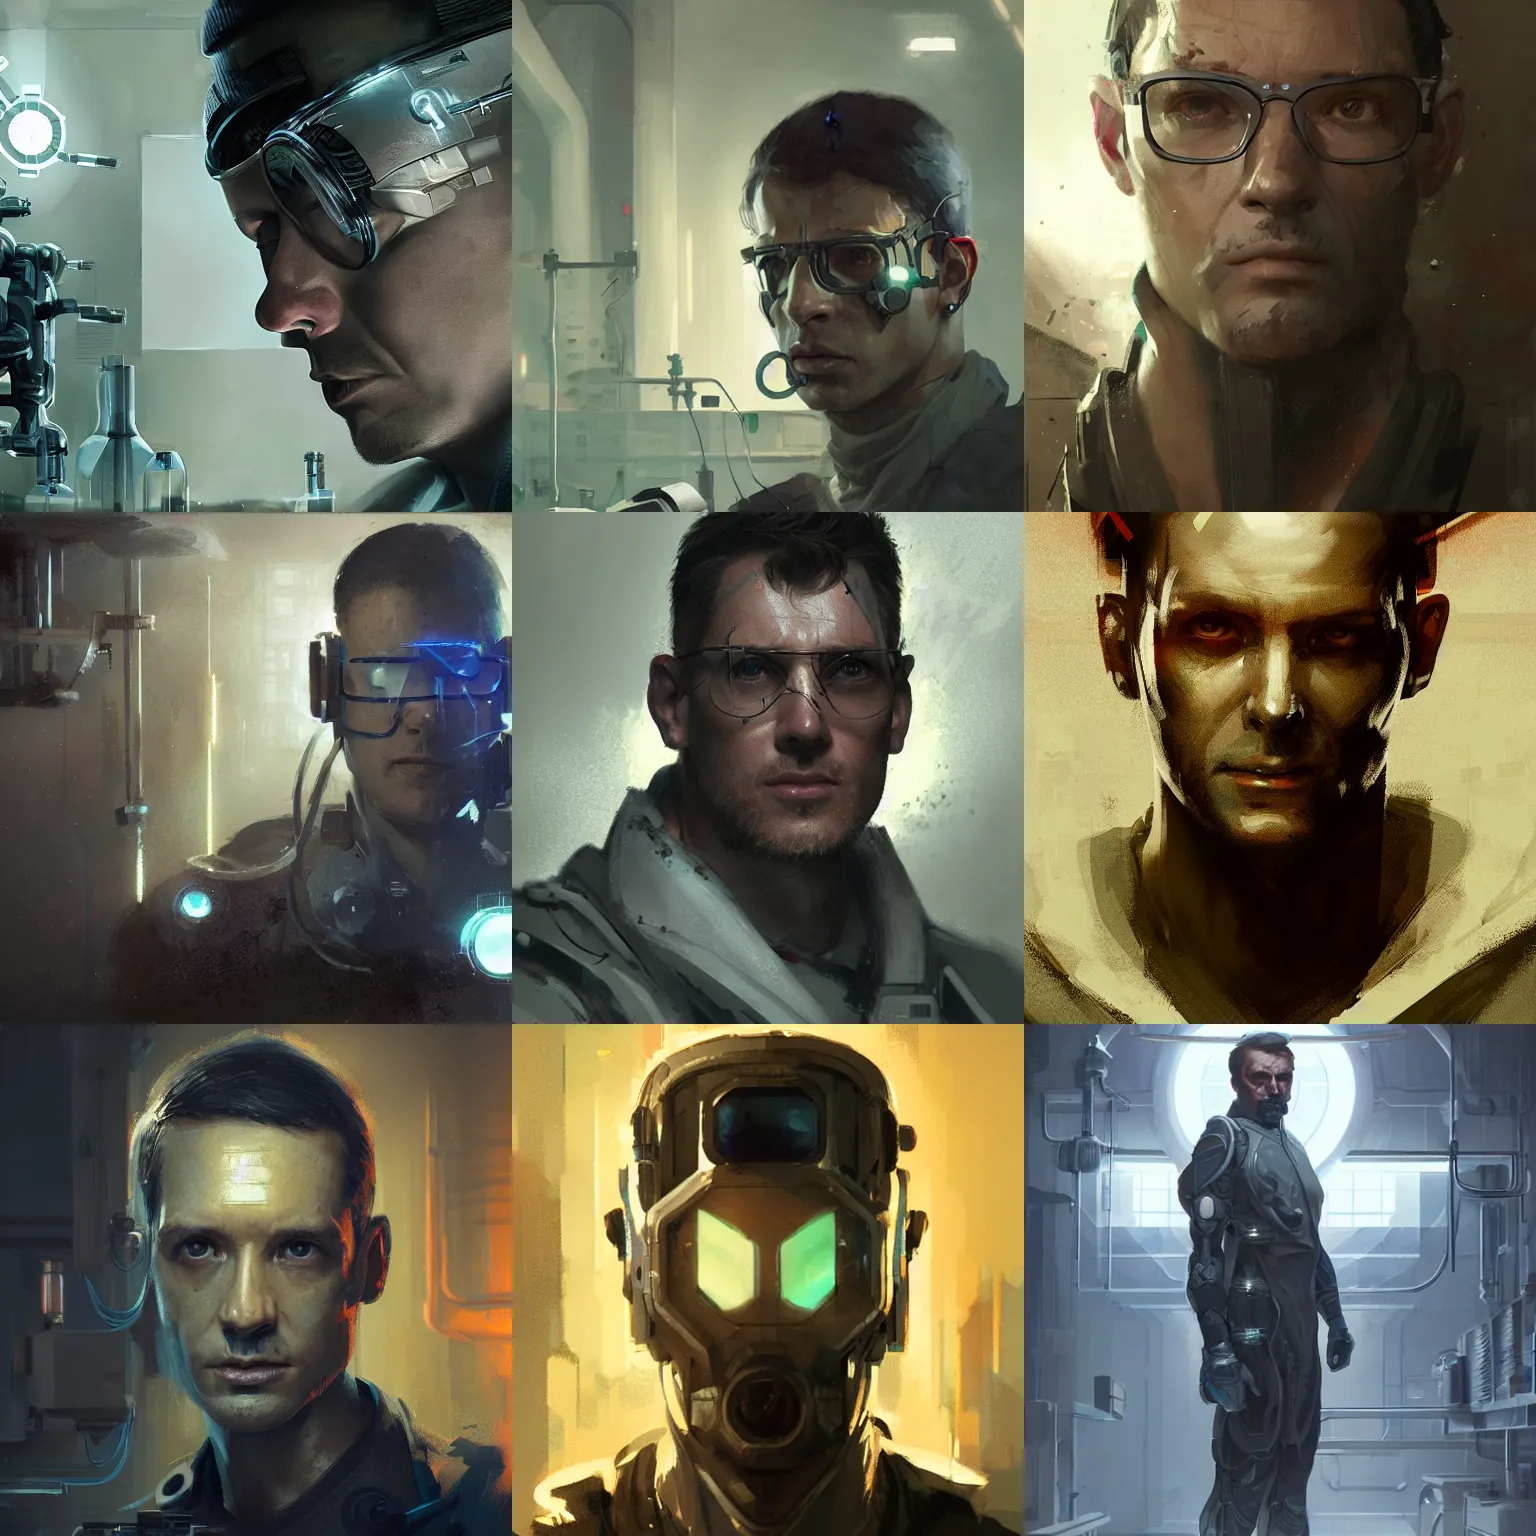 Prompt: a laboratory operator man with cybernetic enhancements, scifi character portrait by greg rutkowski, craig mullins, cinematic lighting, dystopian scifi gear, halfbody portrait